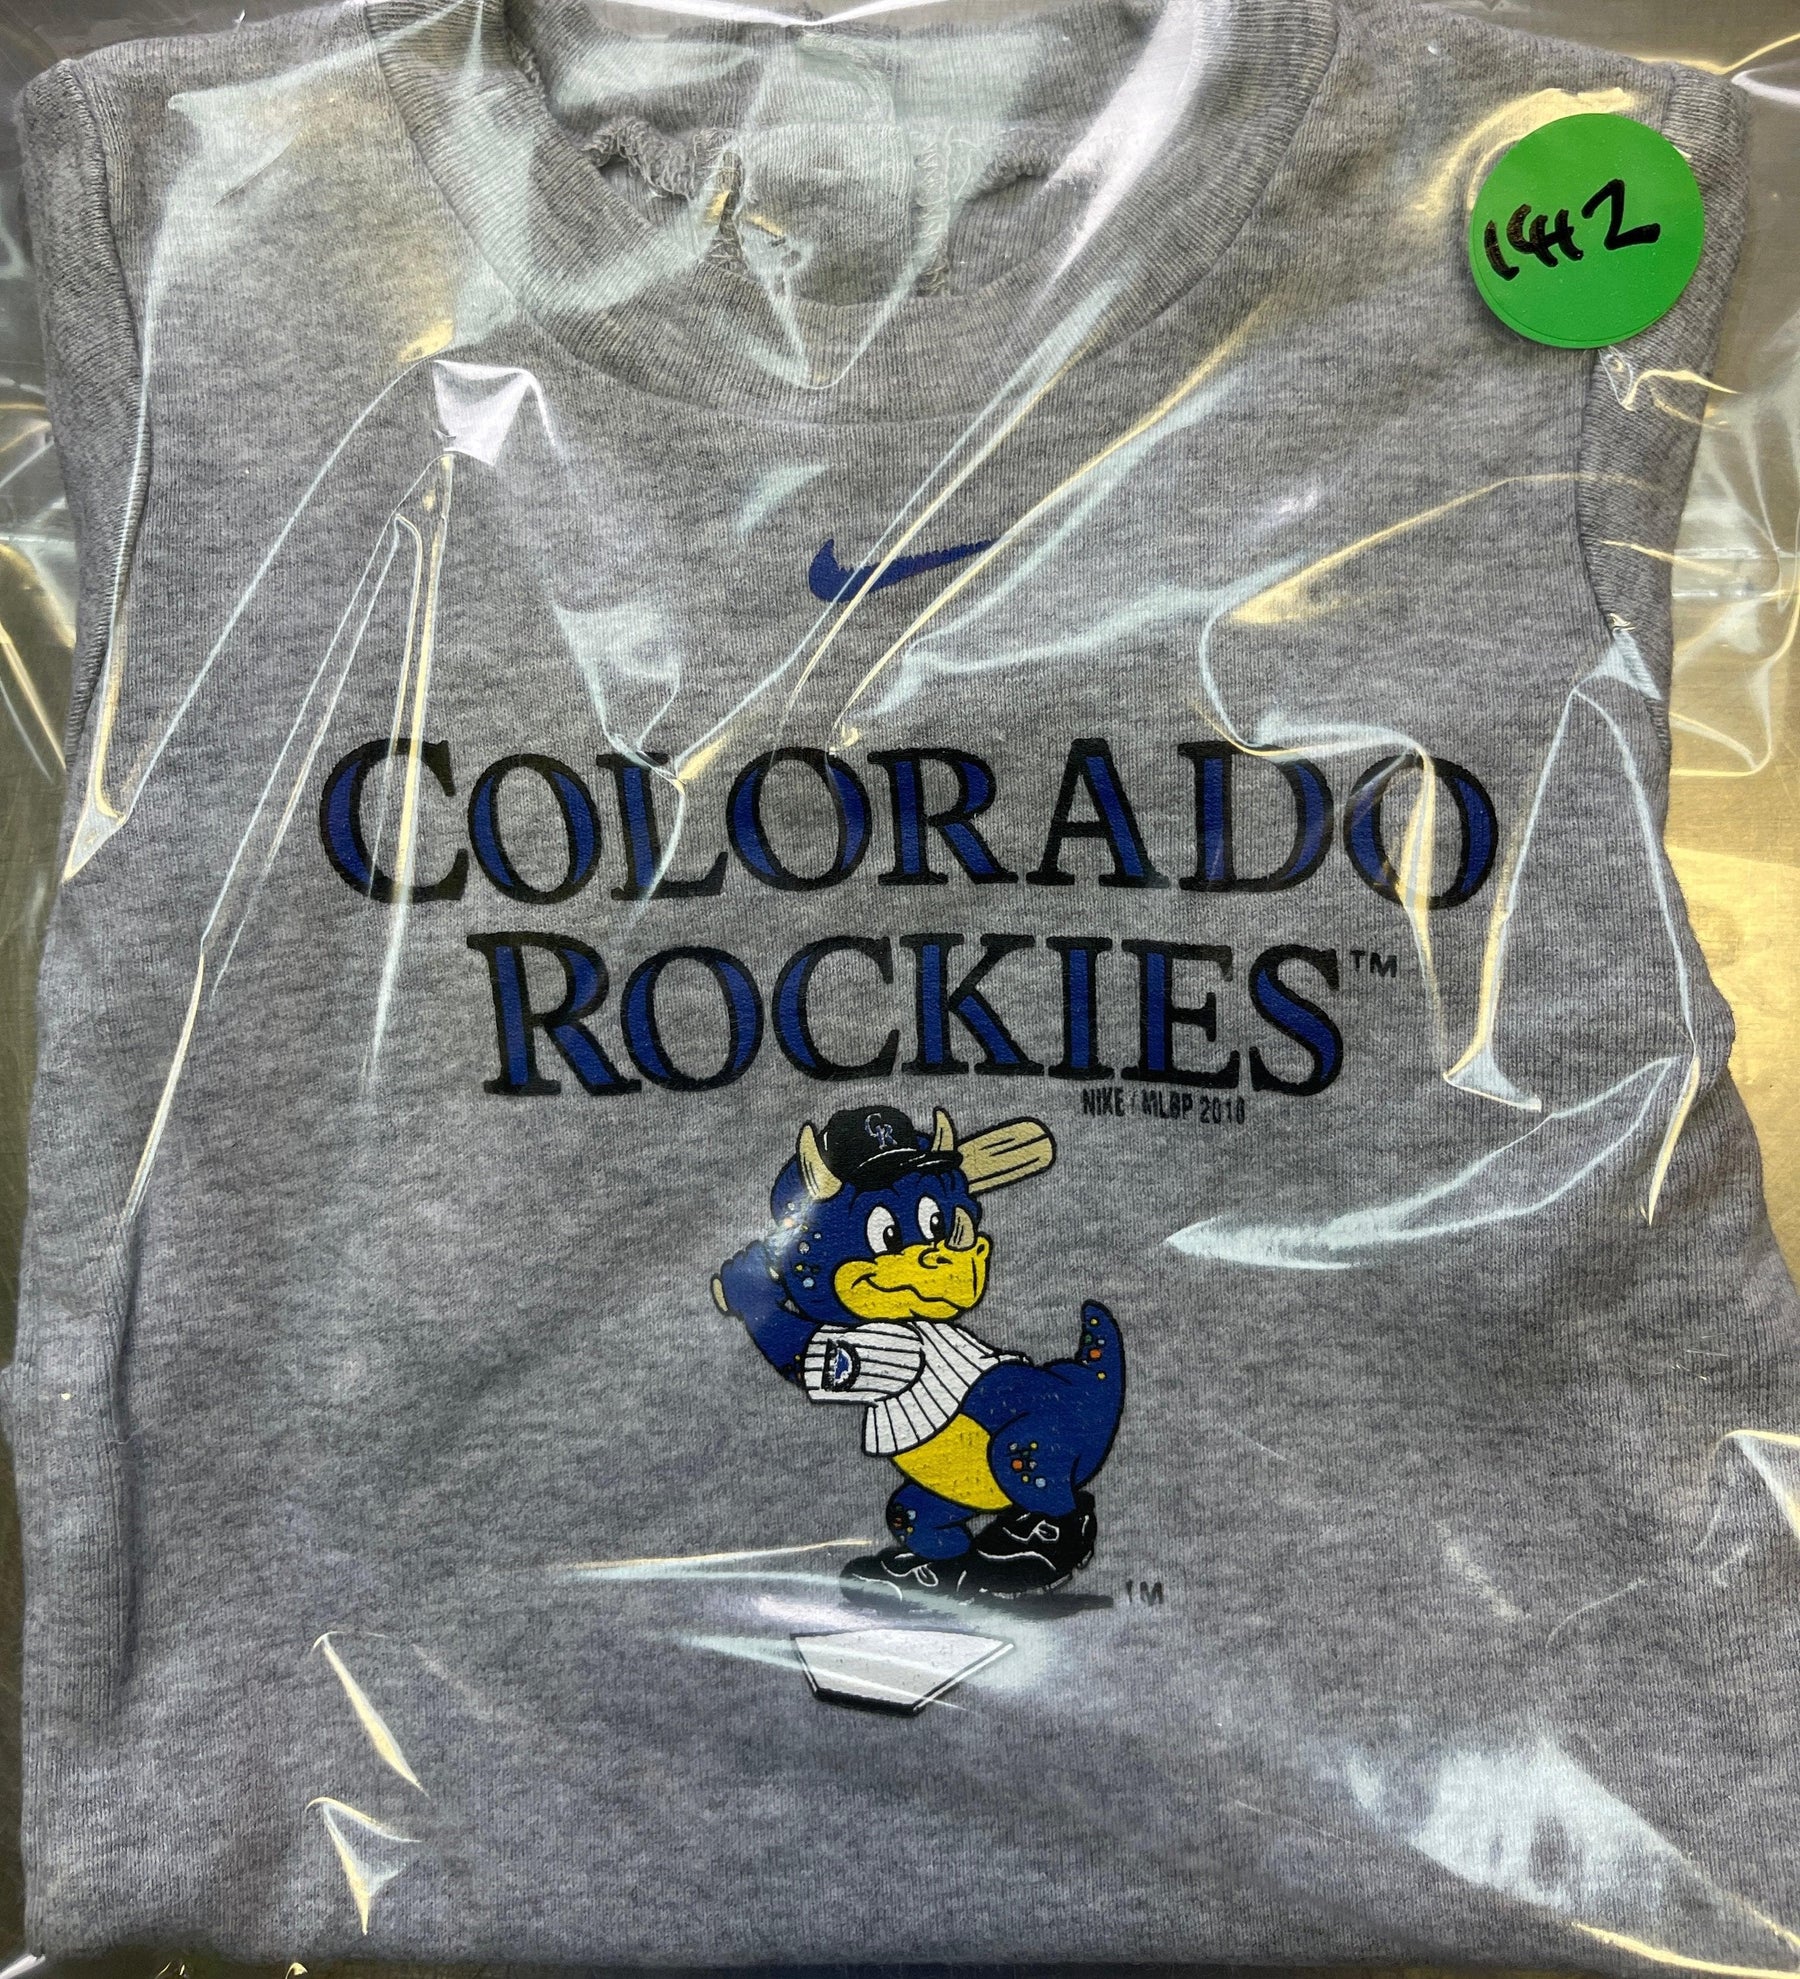 MLB Colorado Rockies Grey Bodysuit 6-9 months